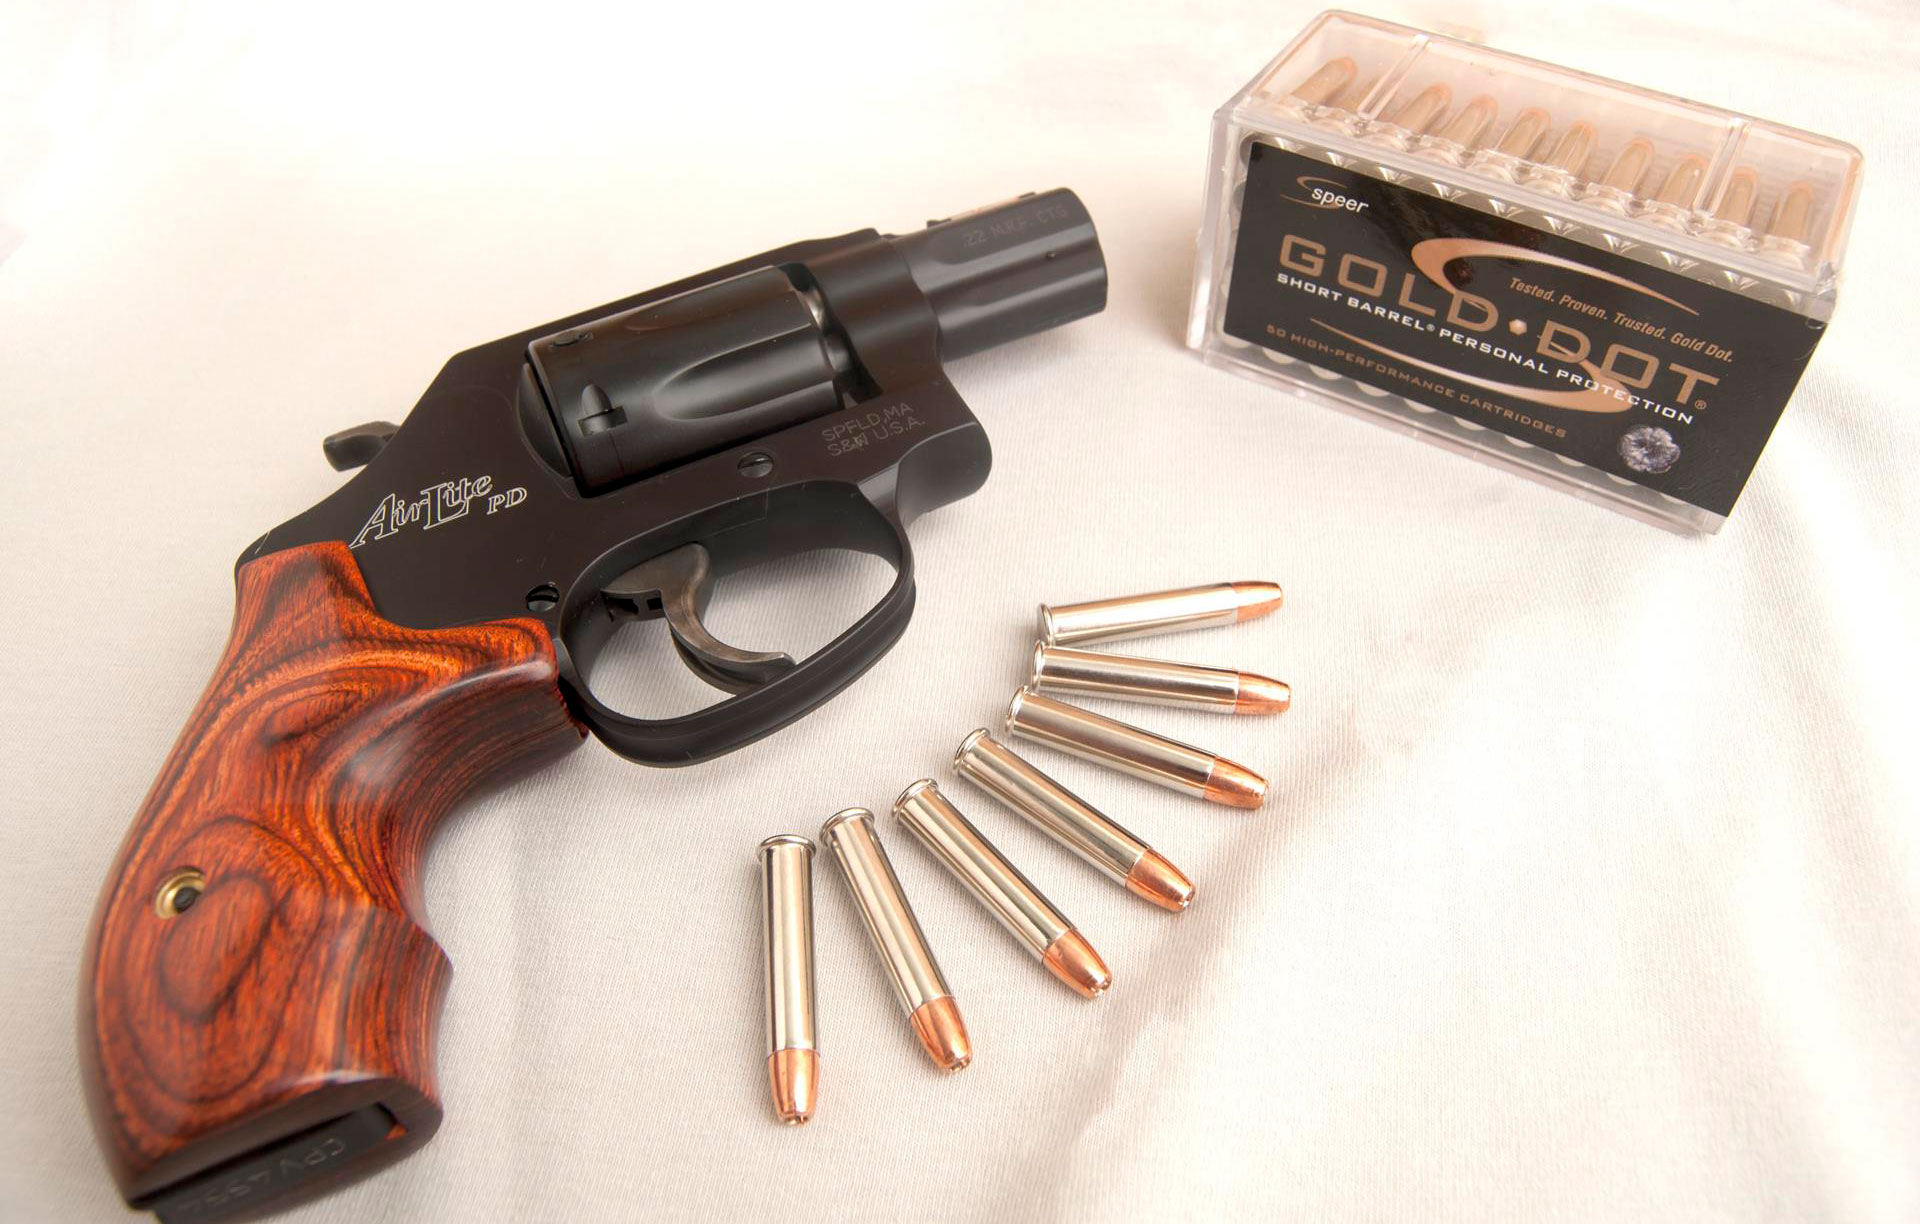 Nra Women Do 22 Mag Snubnose Revolvers Make Sense For Self Defense